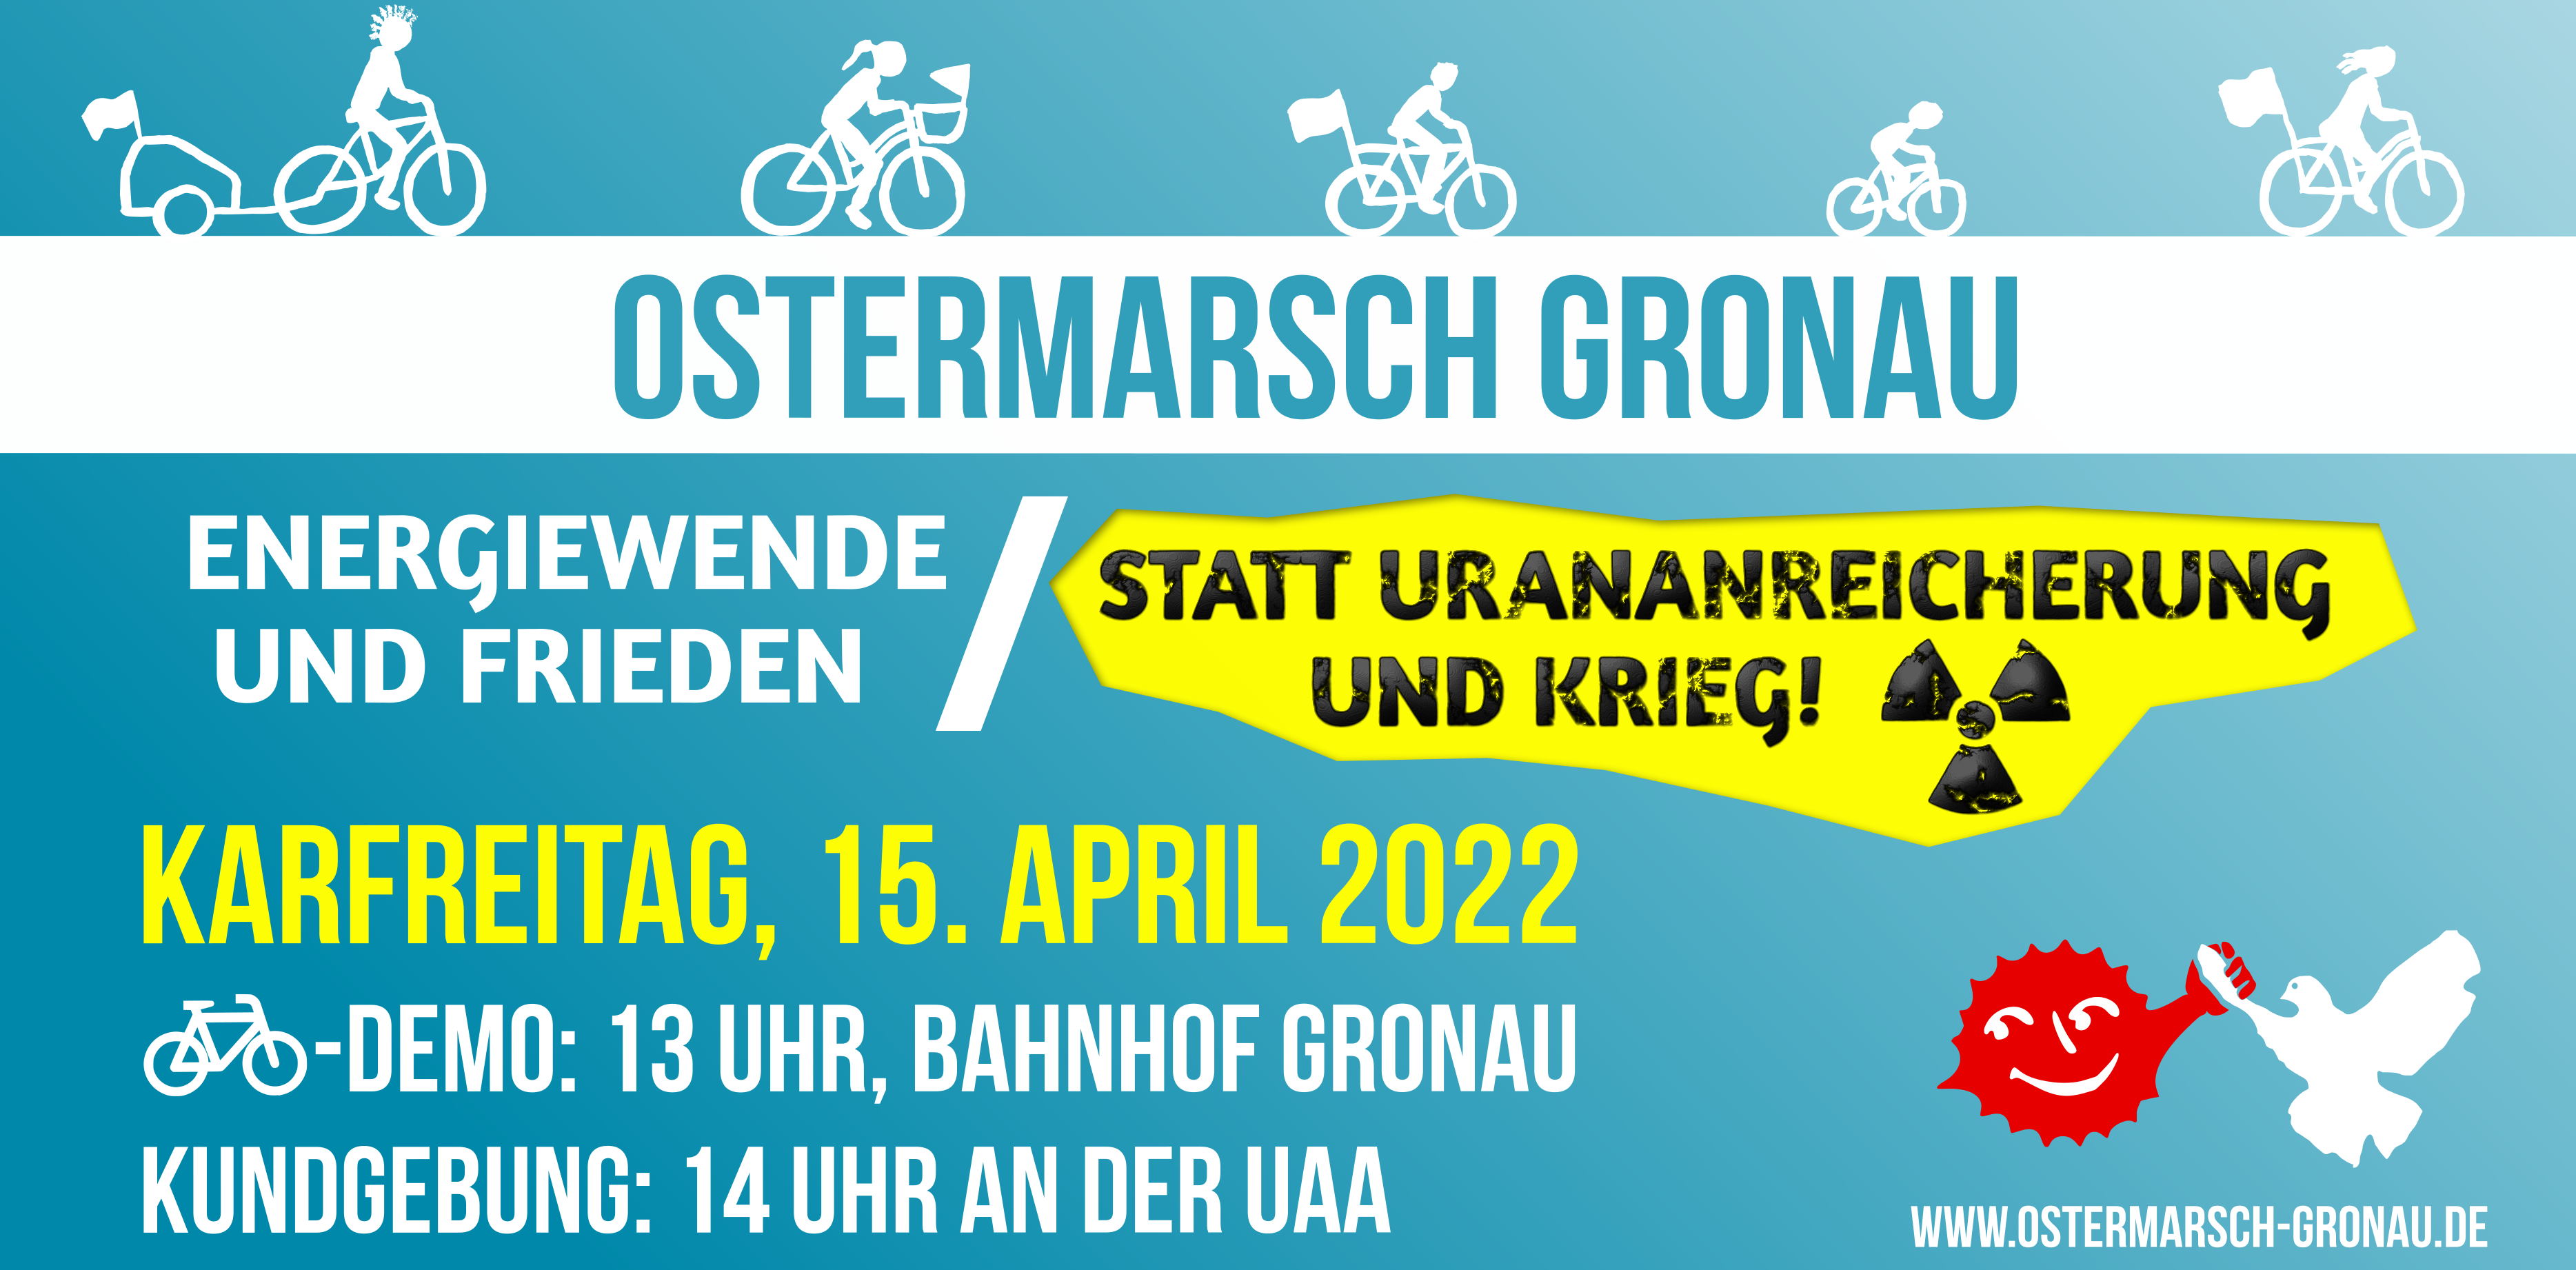 Ostermarsch Gronau, Karfreitag 15. April 2022